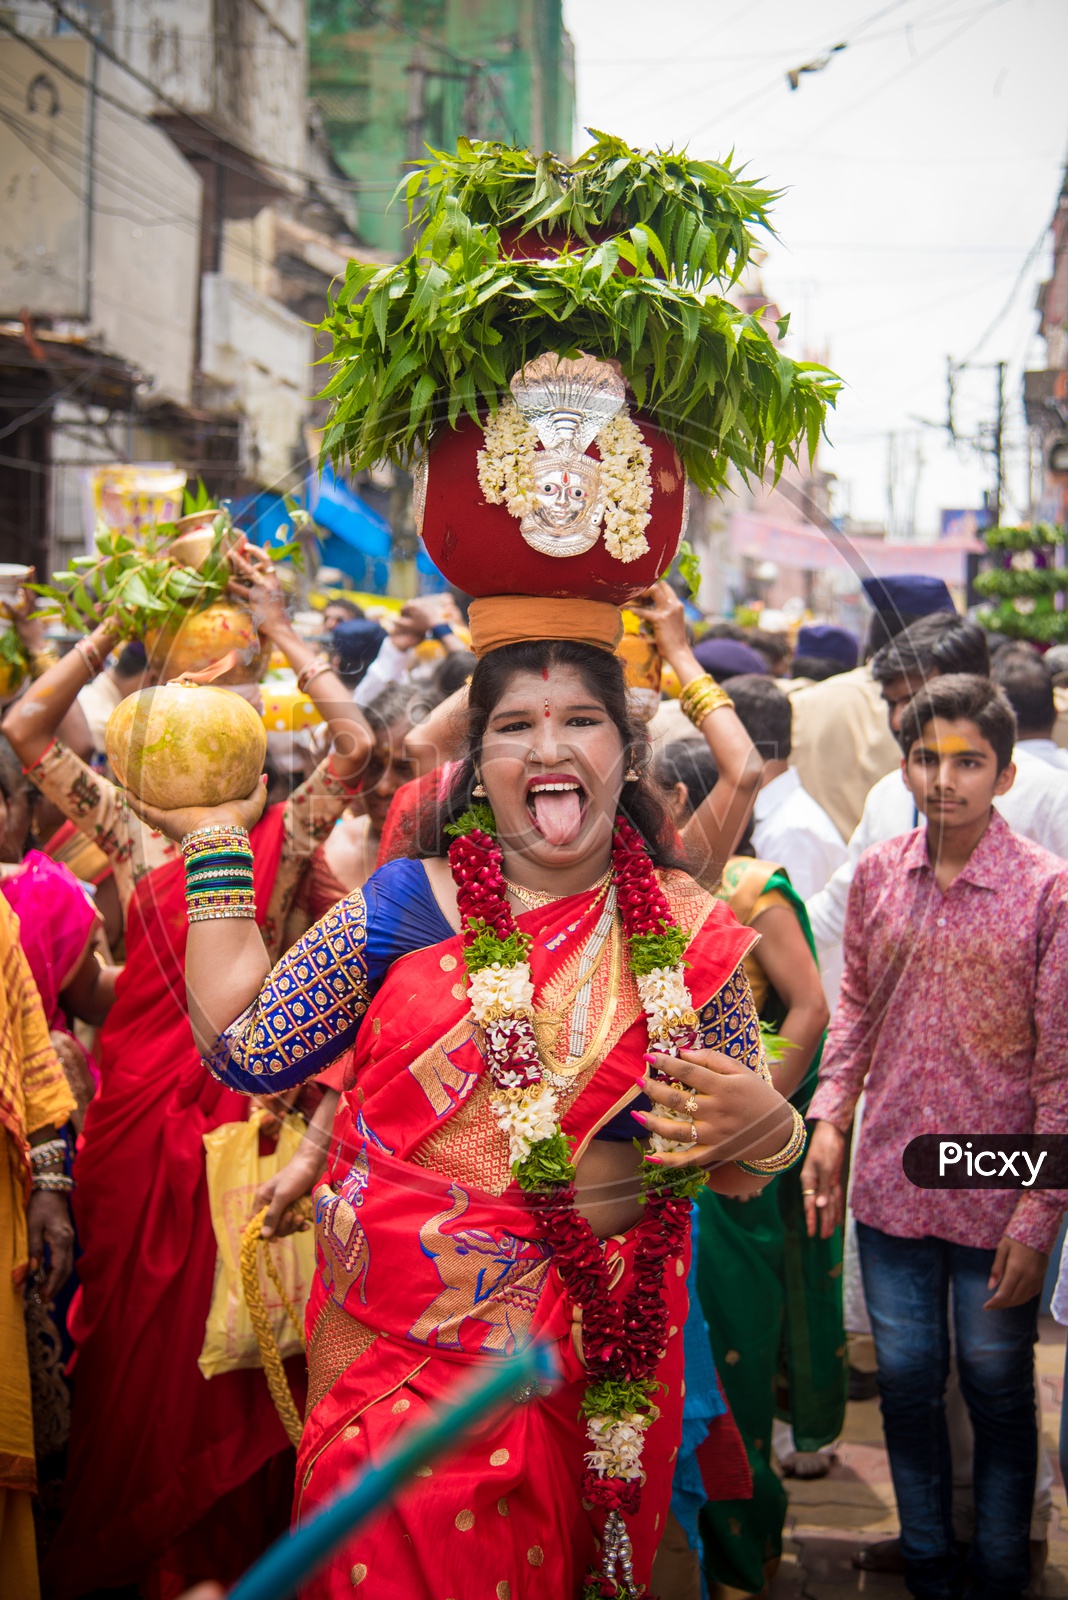 Bonalu Celebrations at Mahankali Temple in Secunderabad